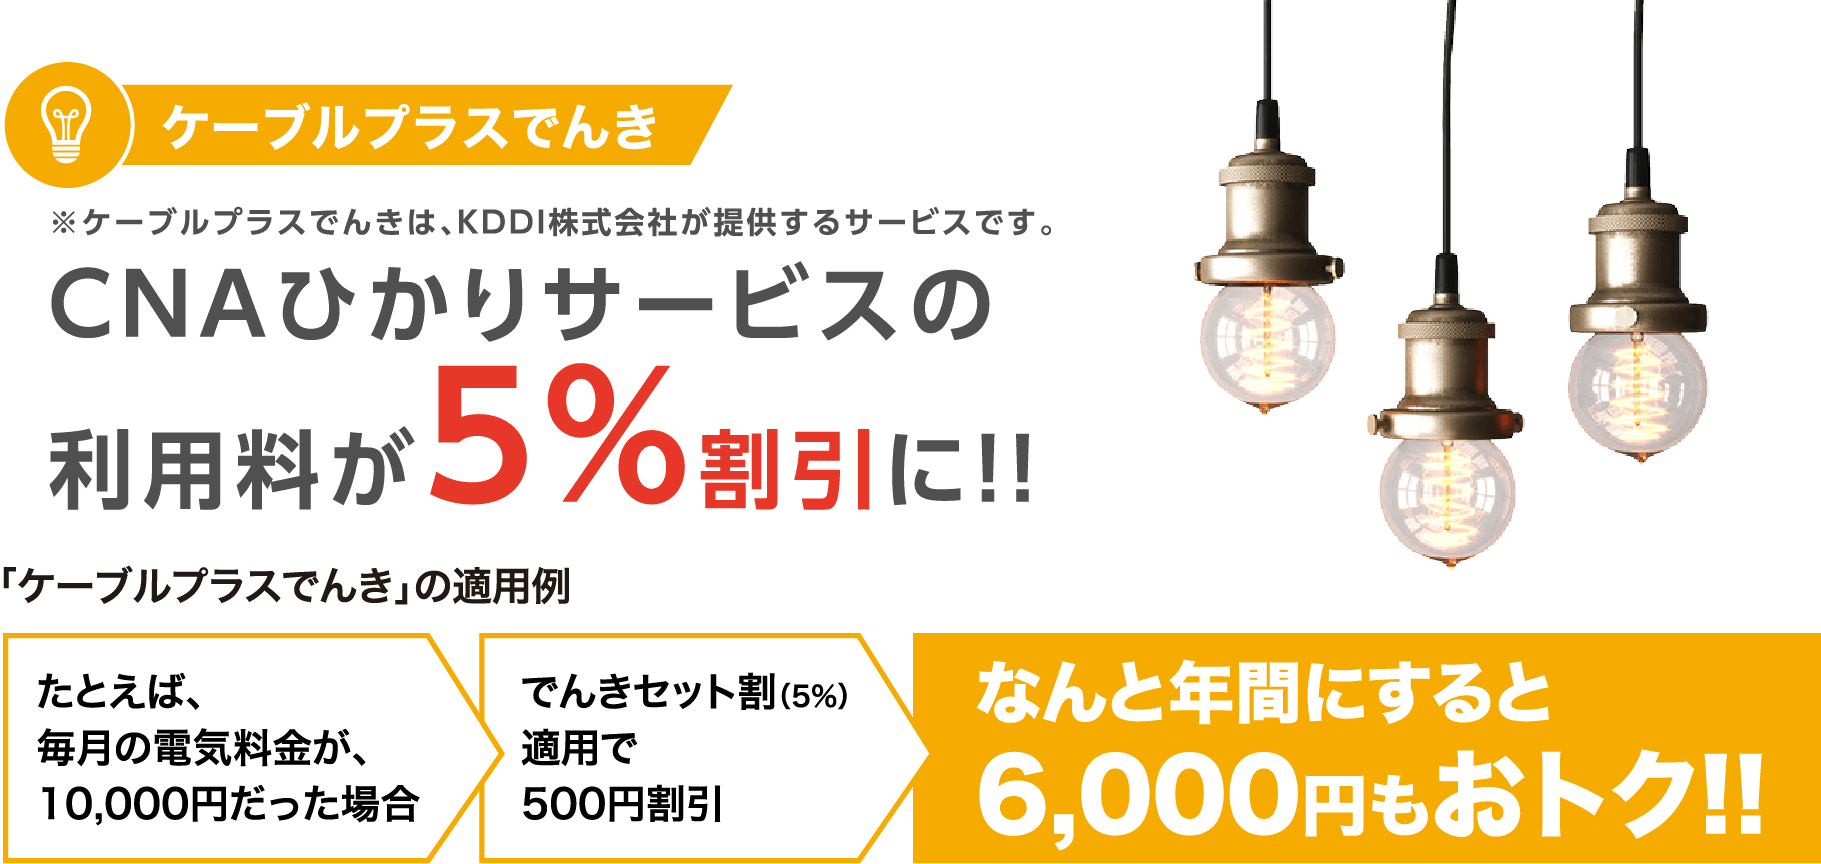 CNAひかりサービスの 利用料が5%割引に!!